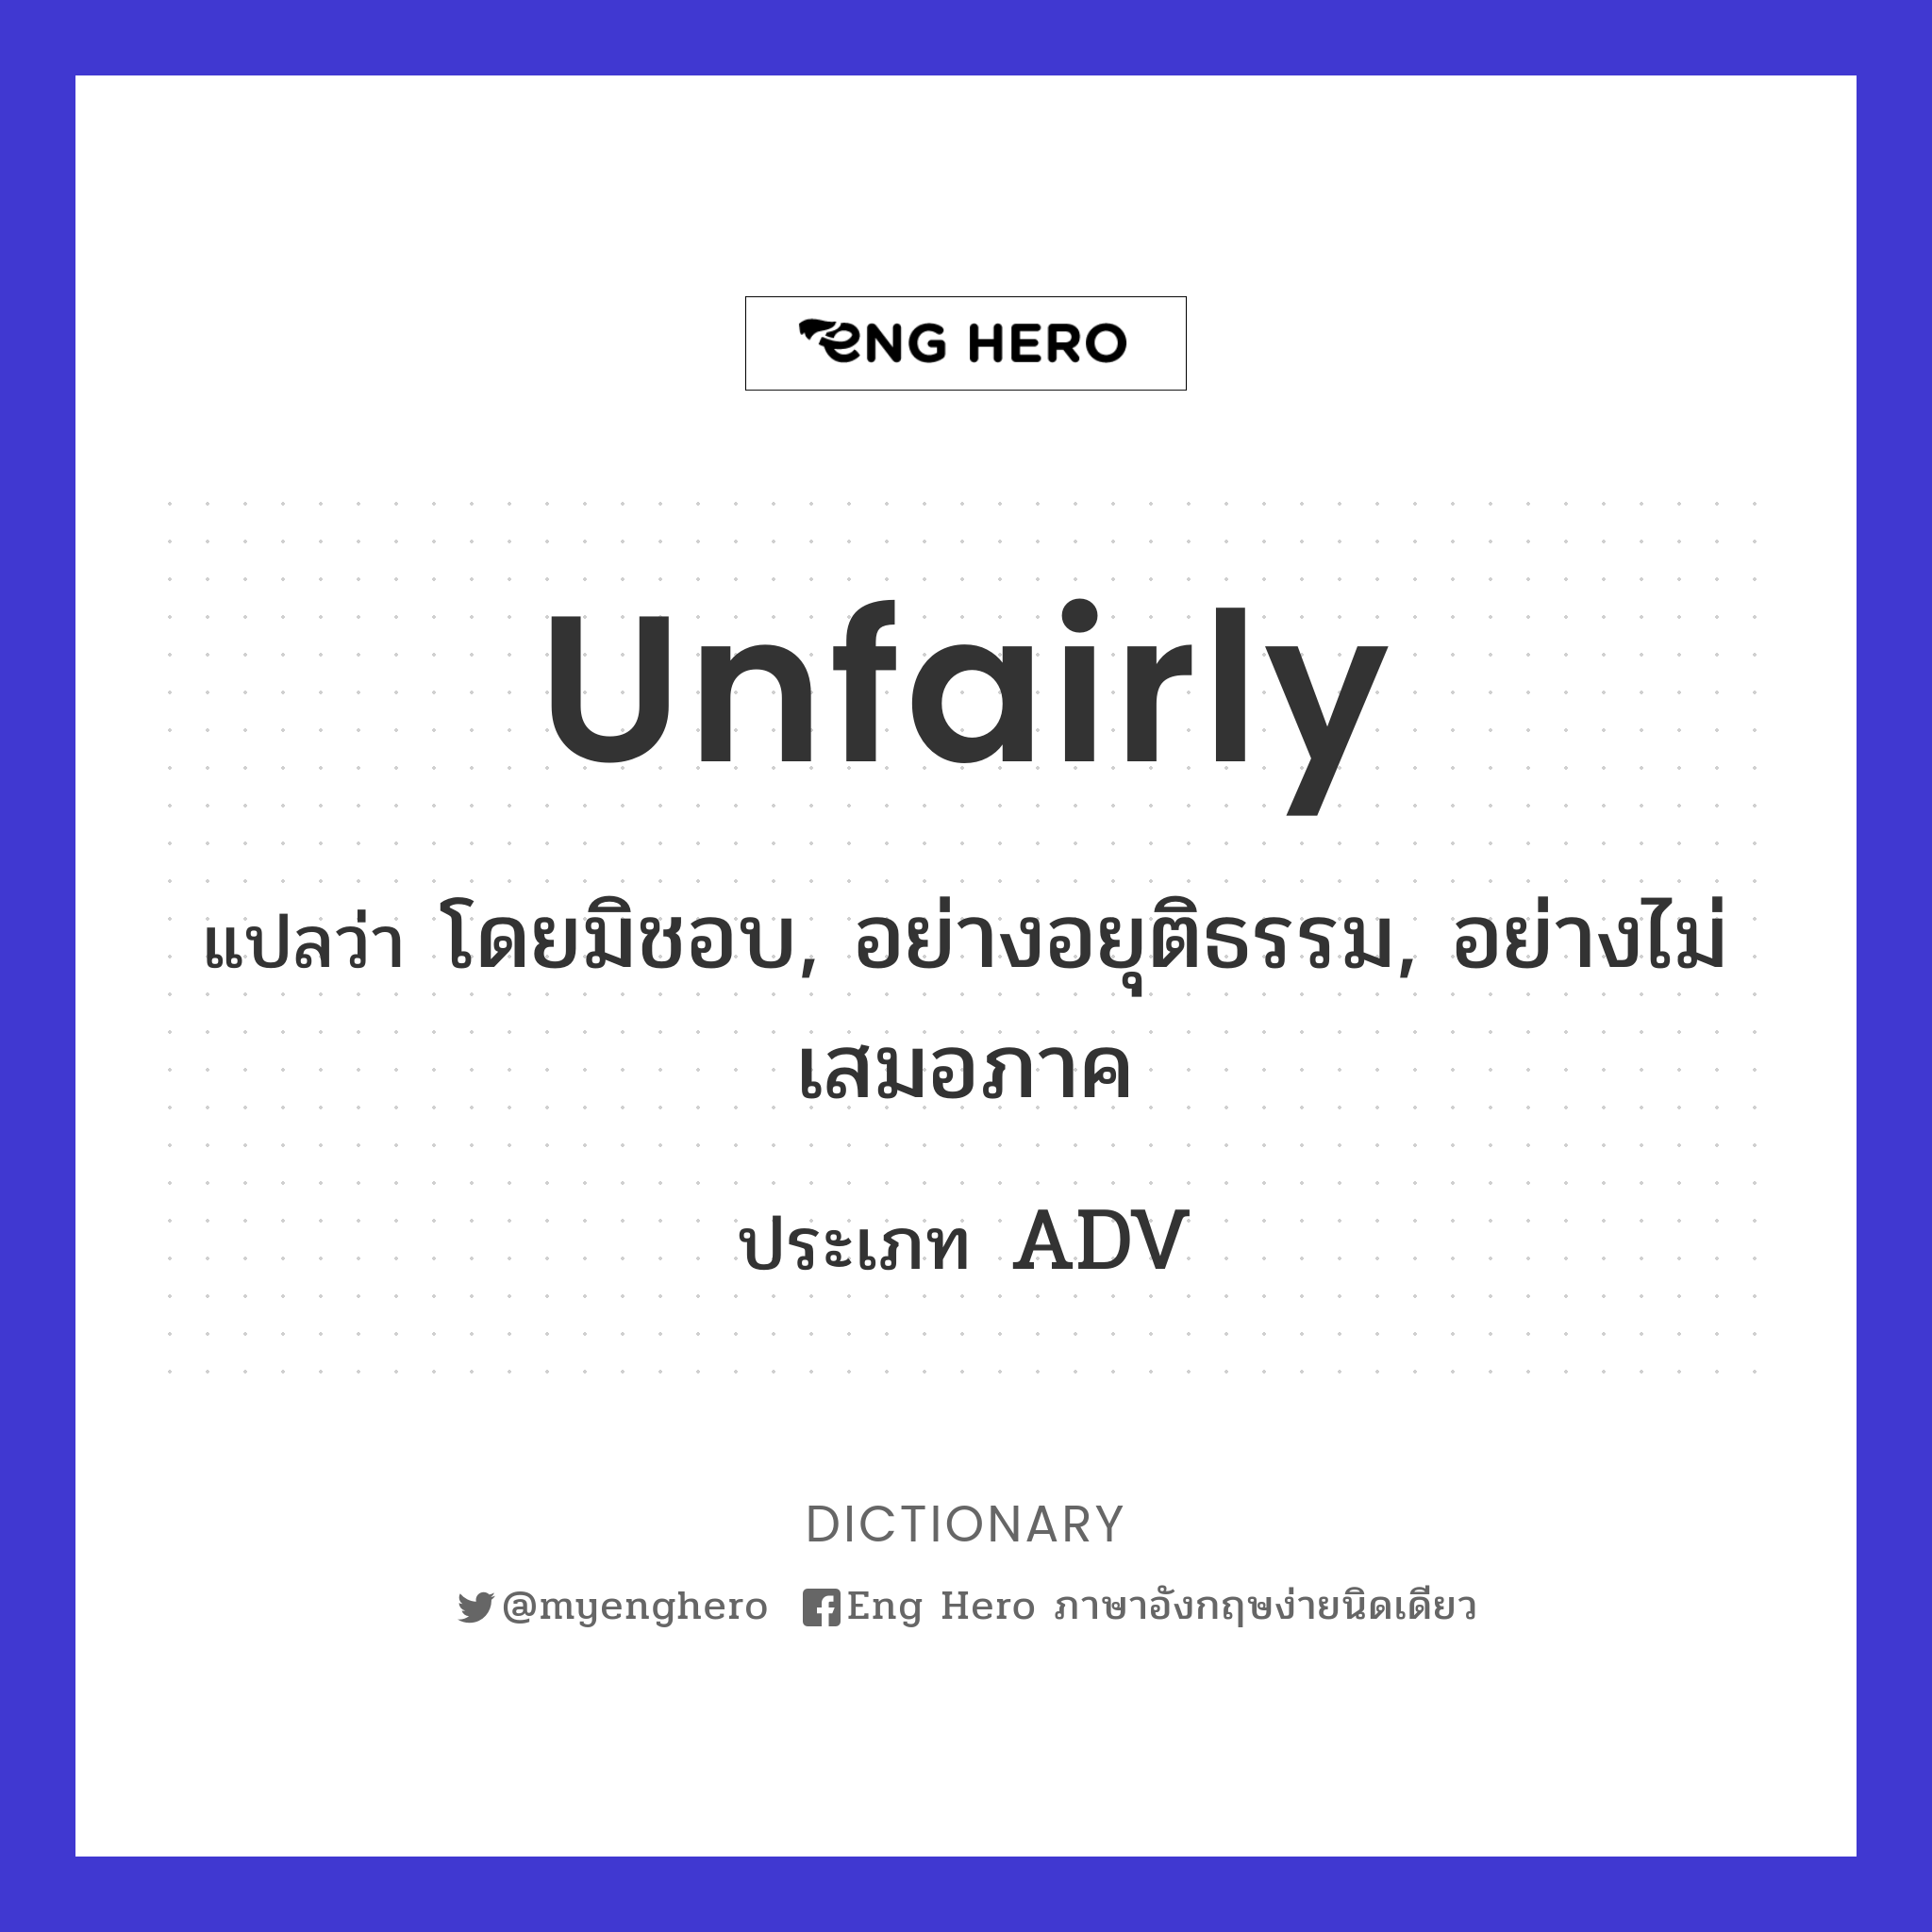 unfairly